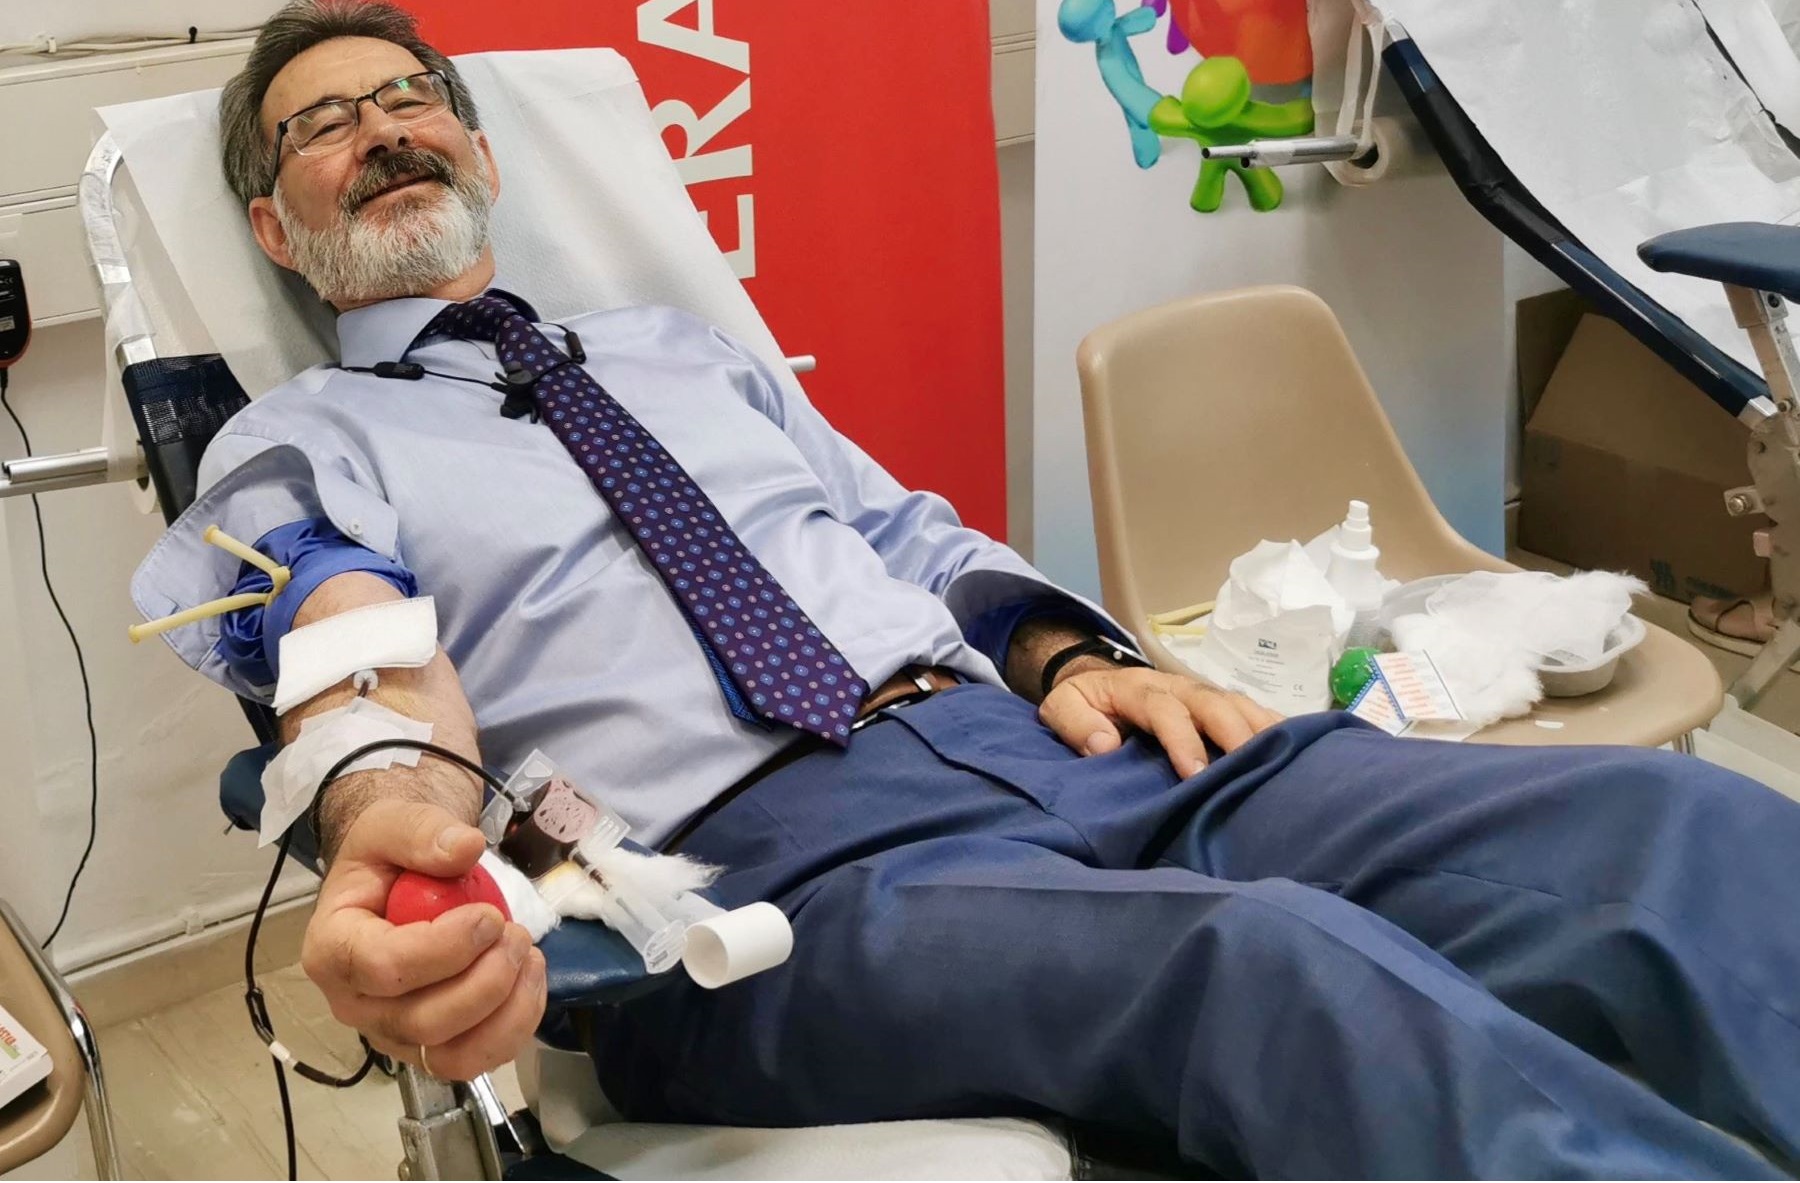 INTERAMERICAN και Π.Ο.Σ.Ε.Α. συνεργάζονται για την ενίσχυση της Εθελοντικής Αιμοδοσίας